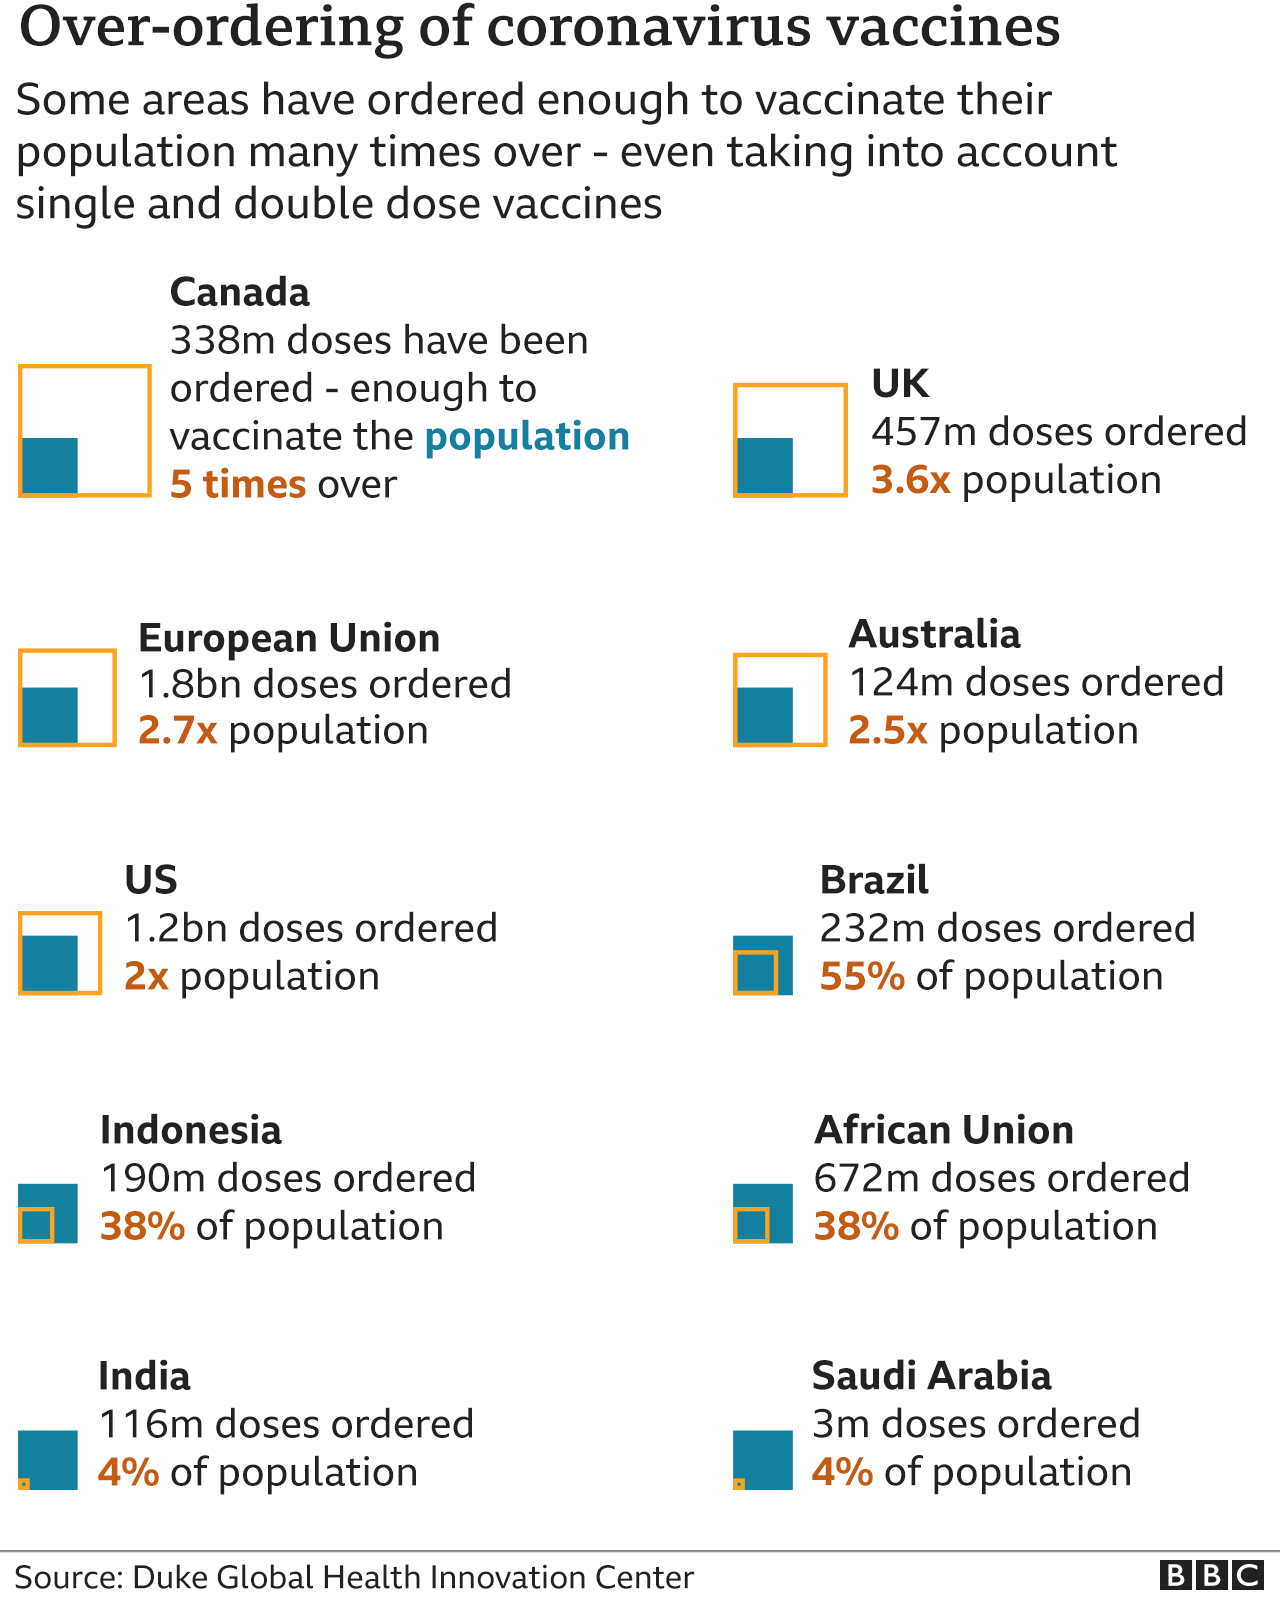 Vaccine over-ordering